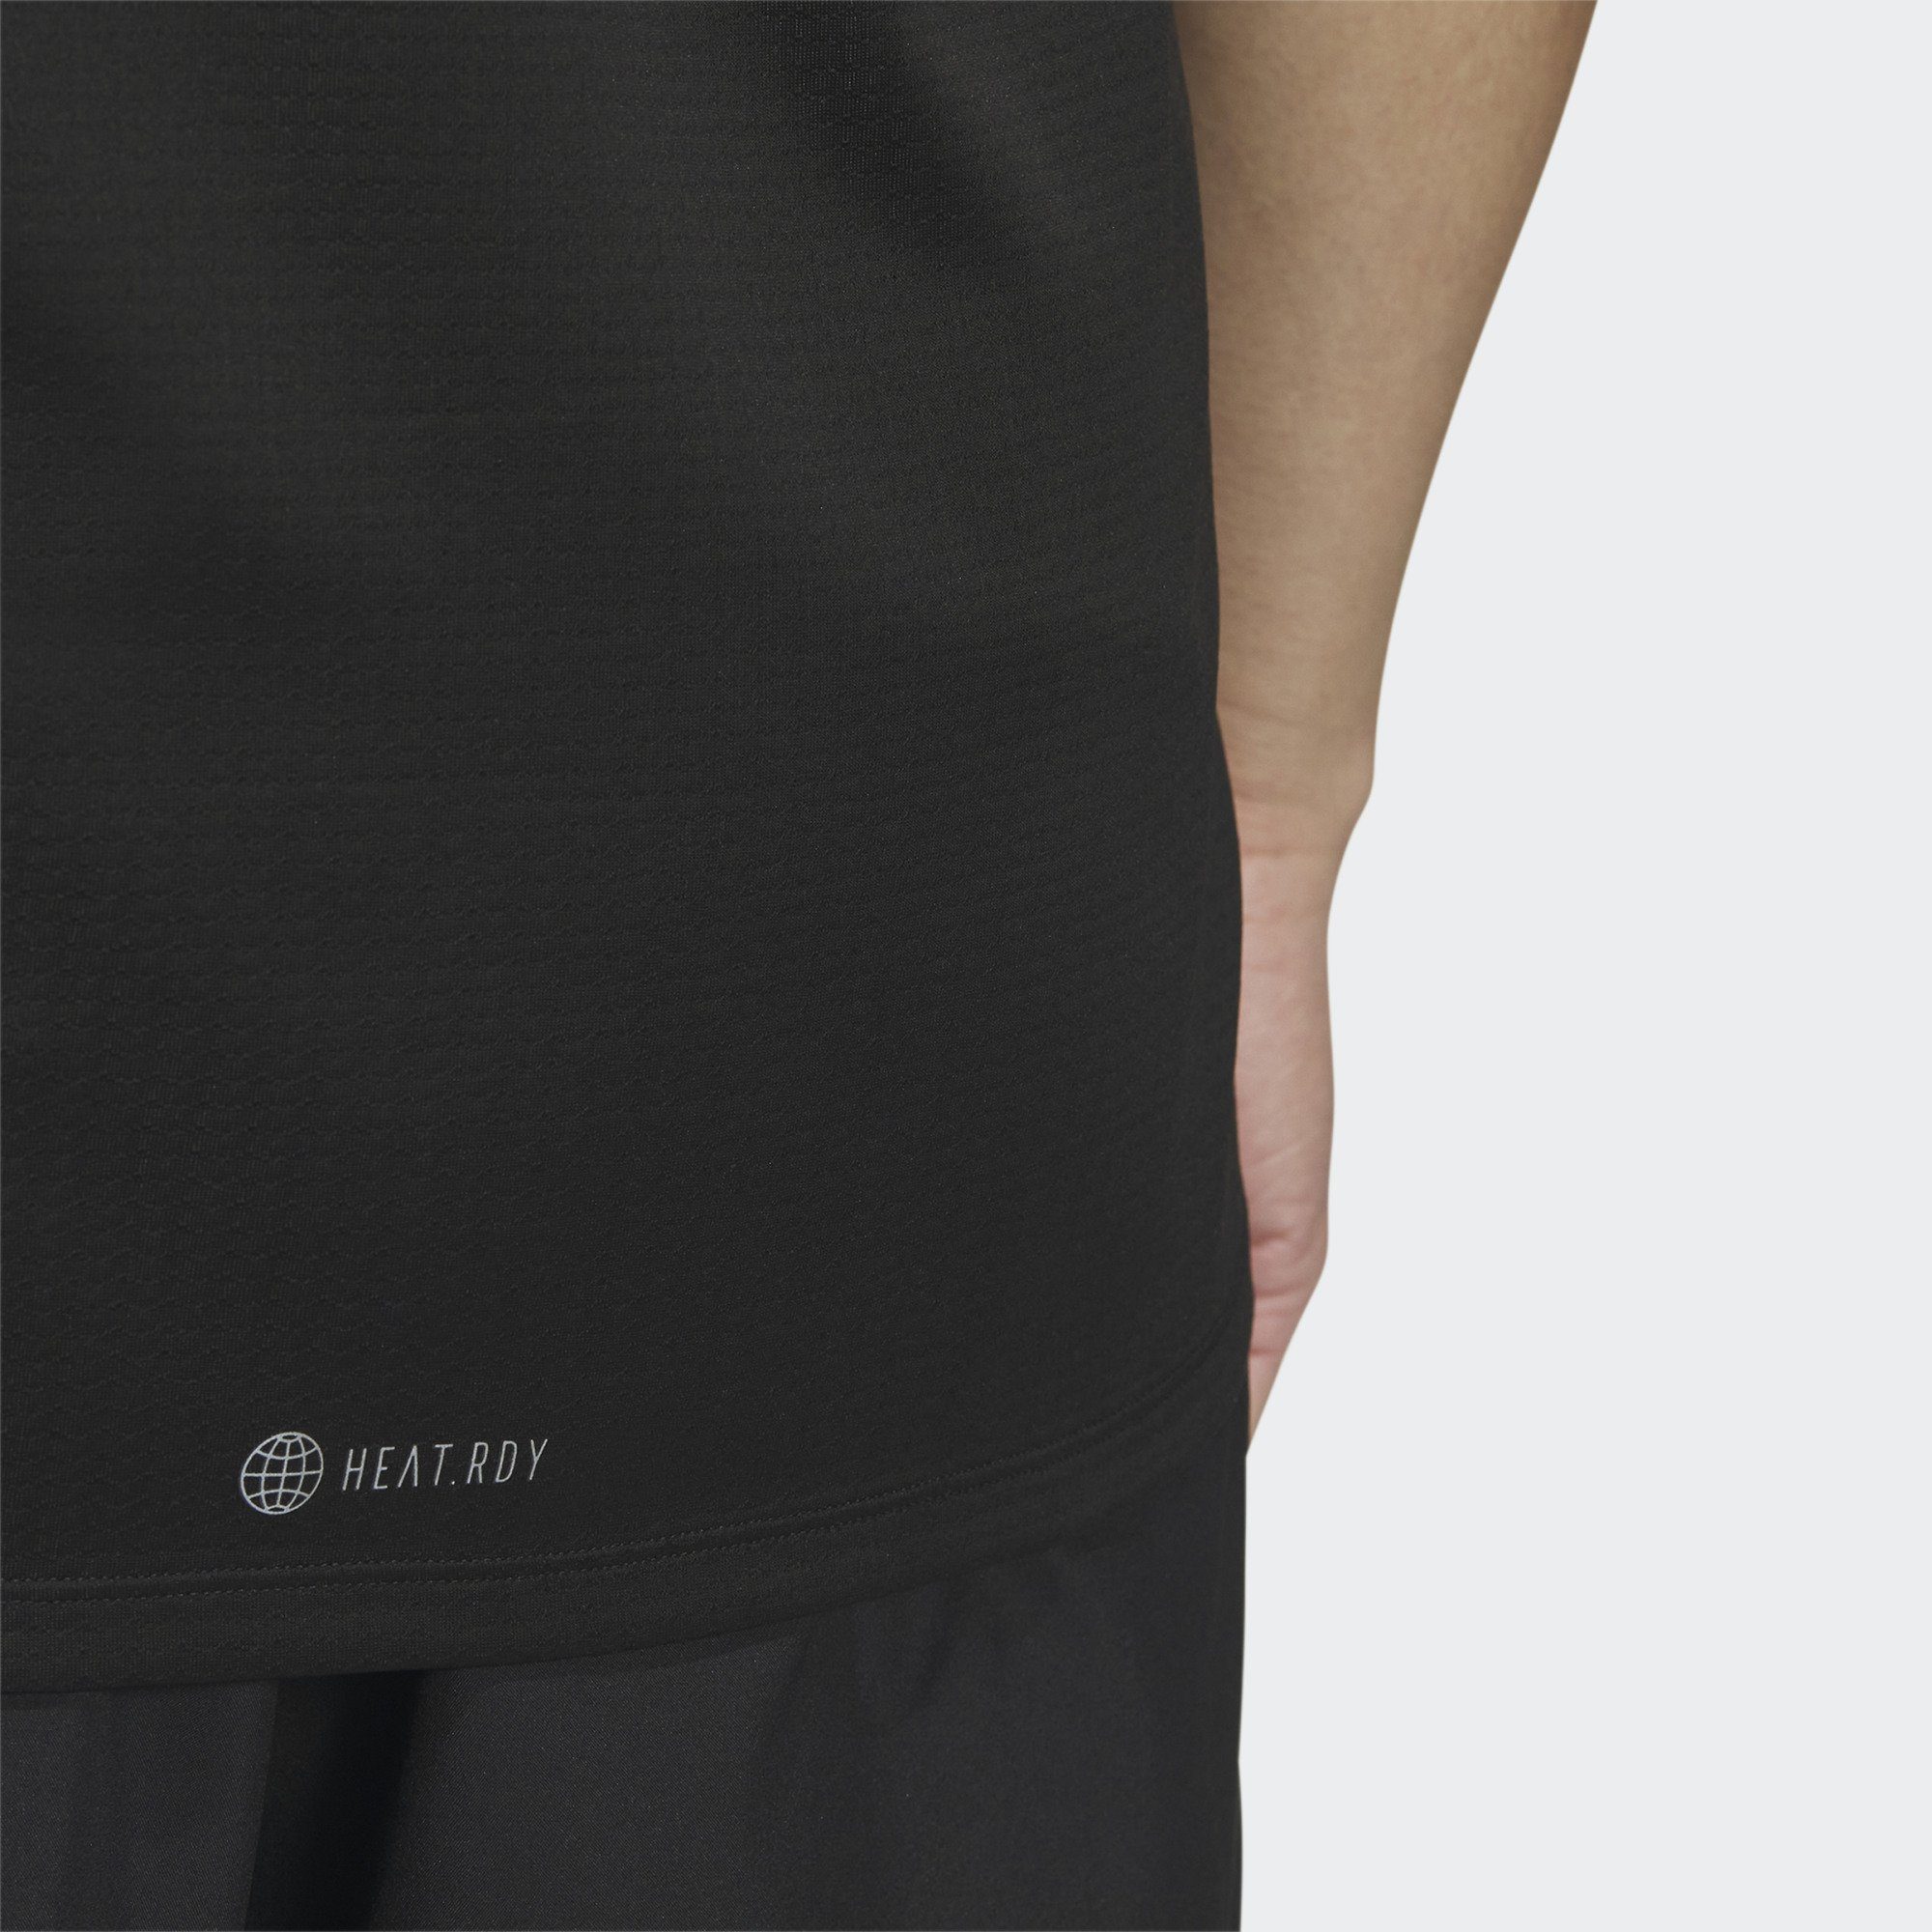 T-SHIRT DESIGNED HEAT.RDY Funktionsshirt HIIT 4 adidas Performance Black TRAINING TRAINING